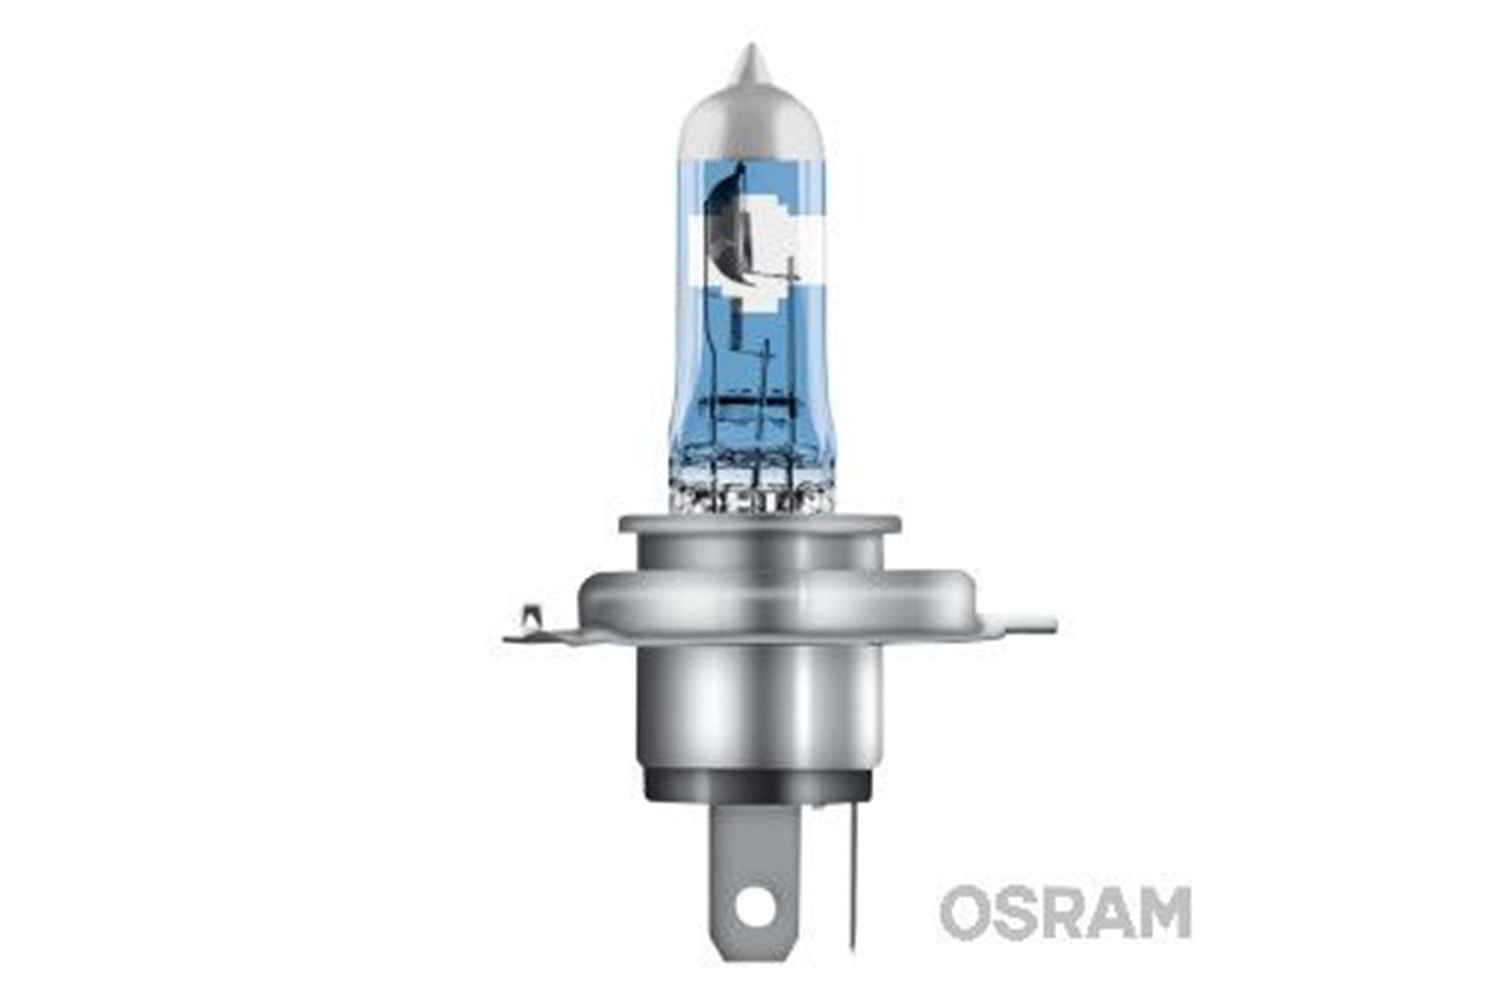 Osram Night Breaker Laser H4 Ampul Seti Sağ ve Sol 2 Li